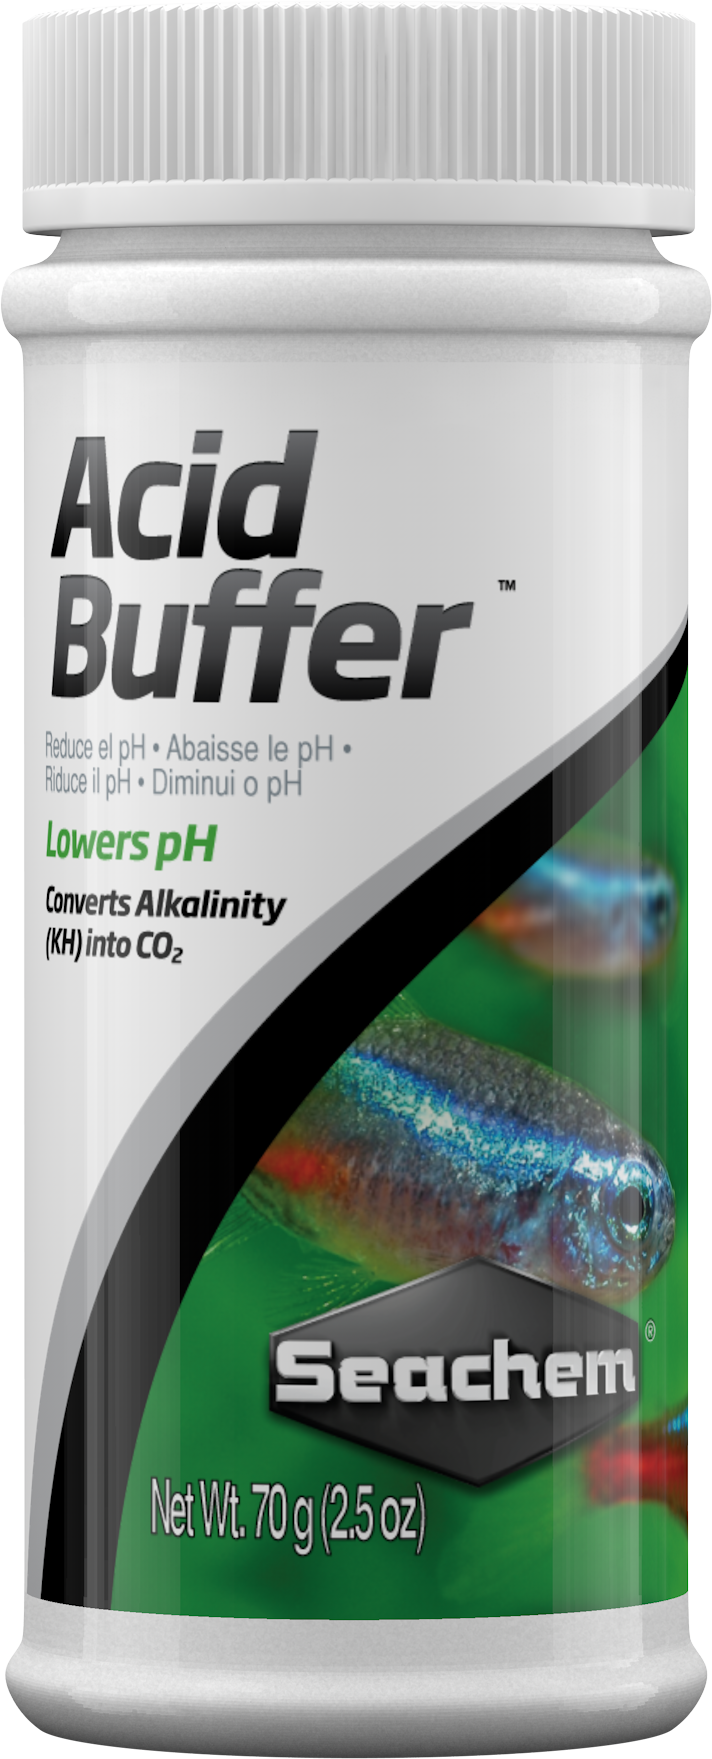 Seachem Acid Buffer